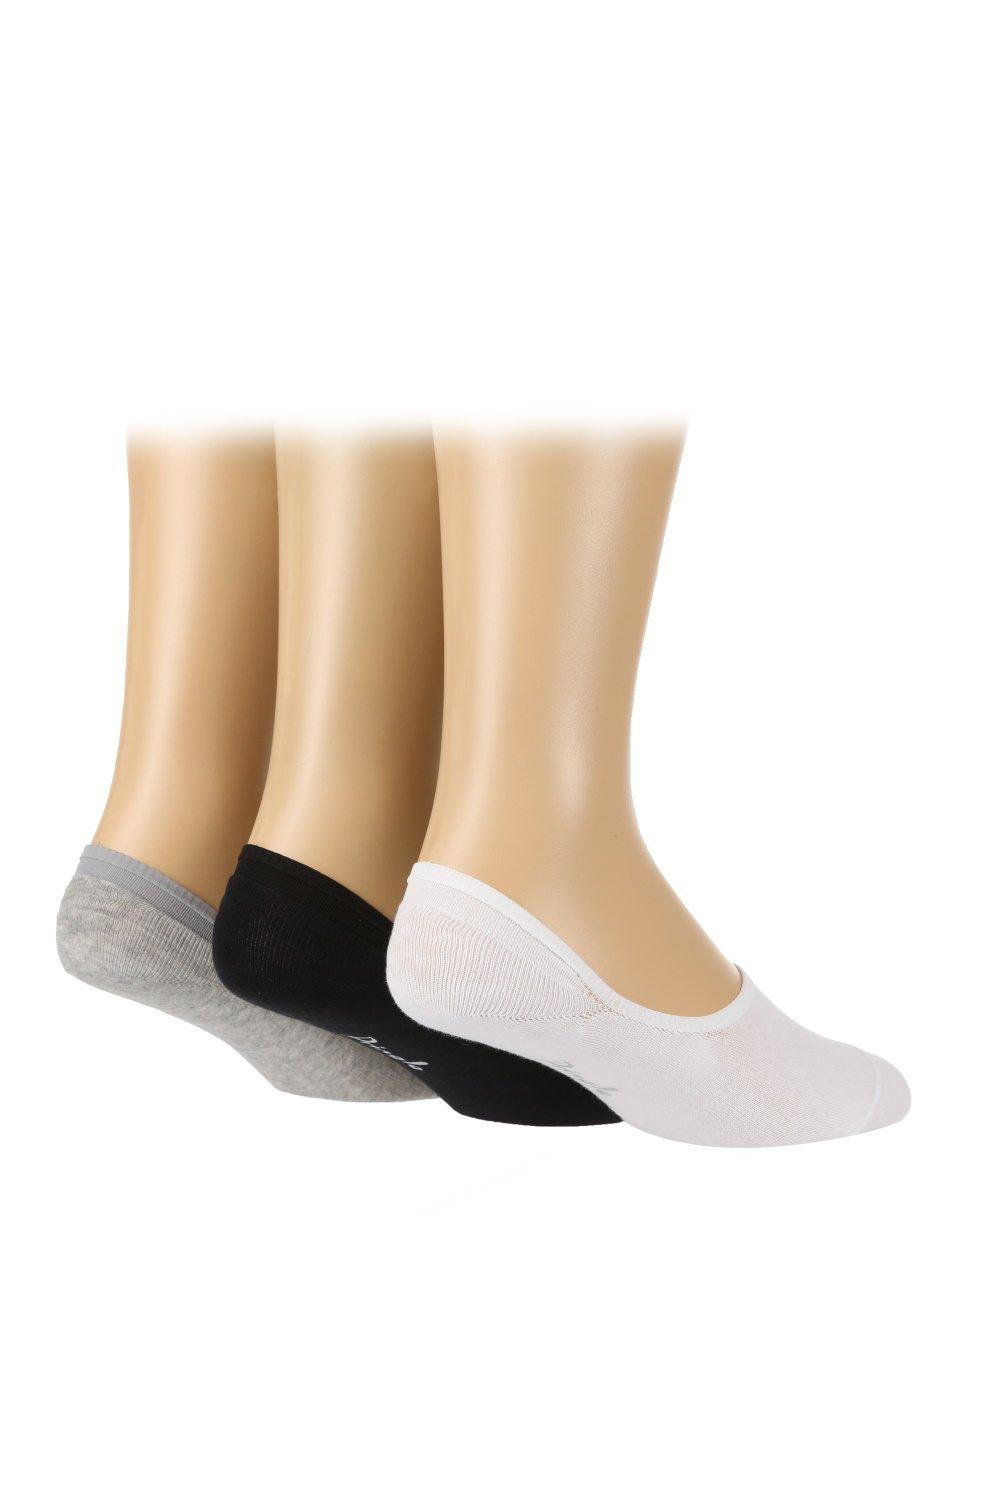 3 Pair Pack Cotton Shoe Liner Socks